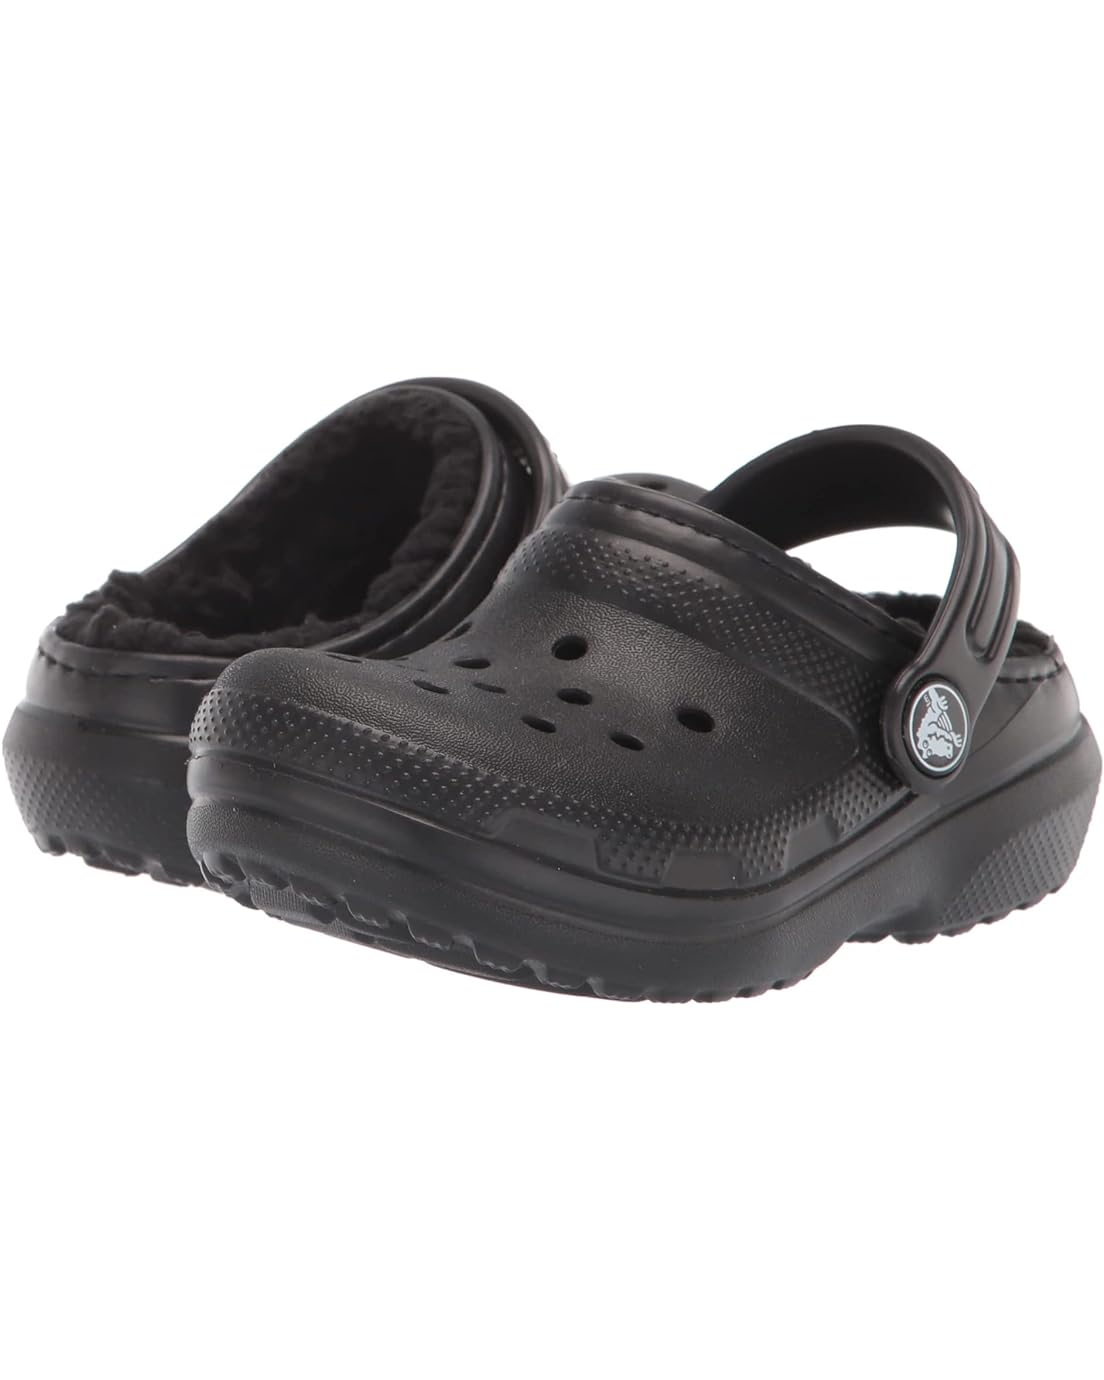 Crocs Kids Classic Lined Clog (Toddler)